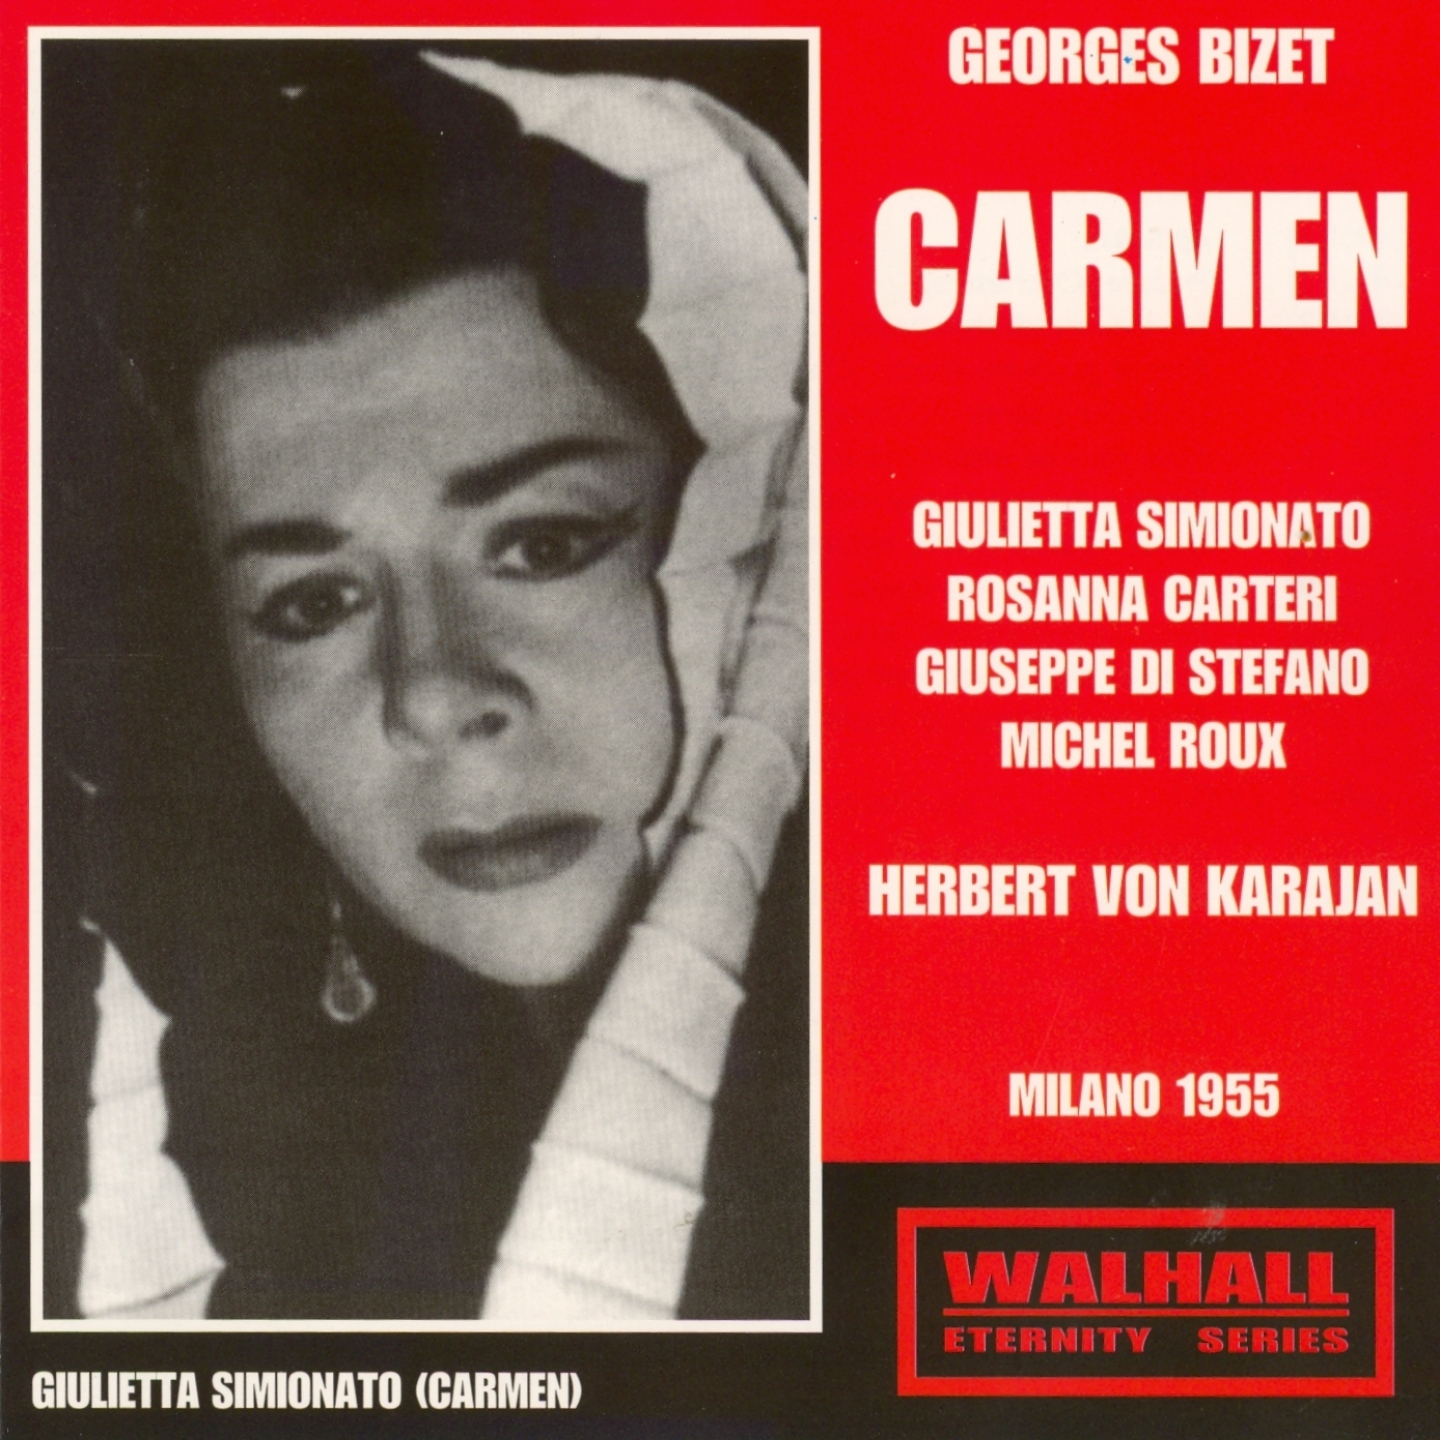 Carmen, Act I : Avec la Garde montant